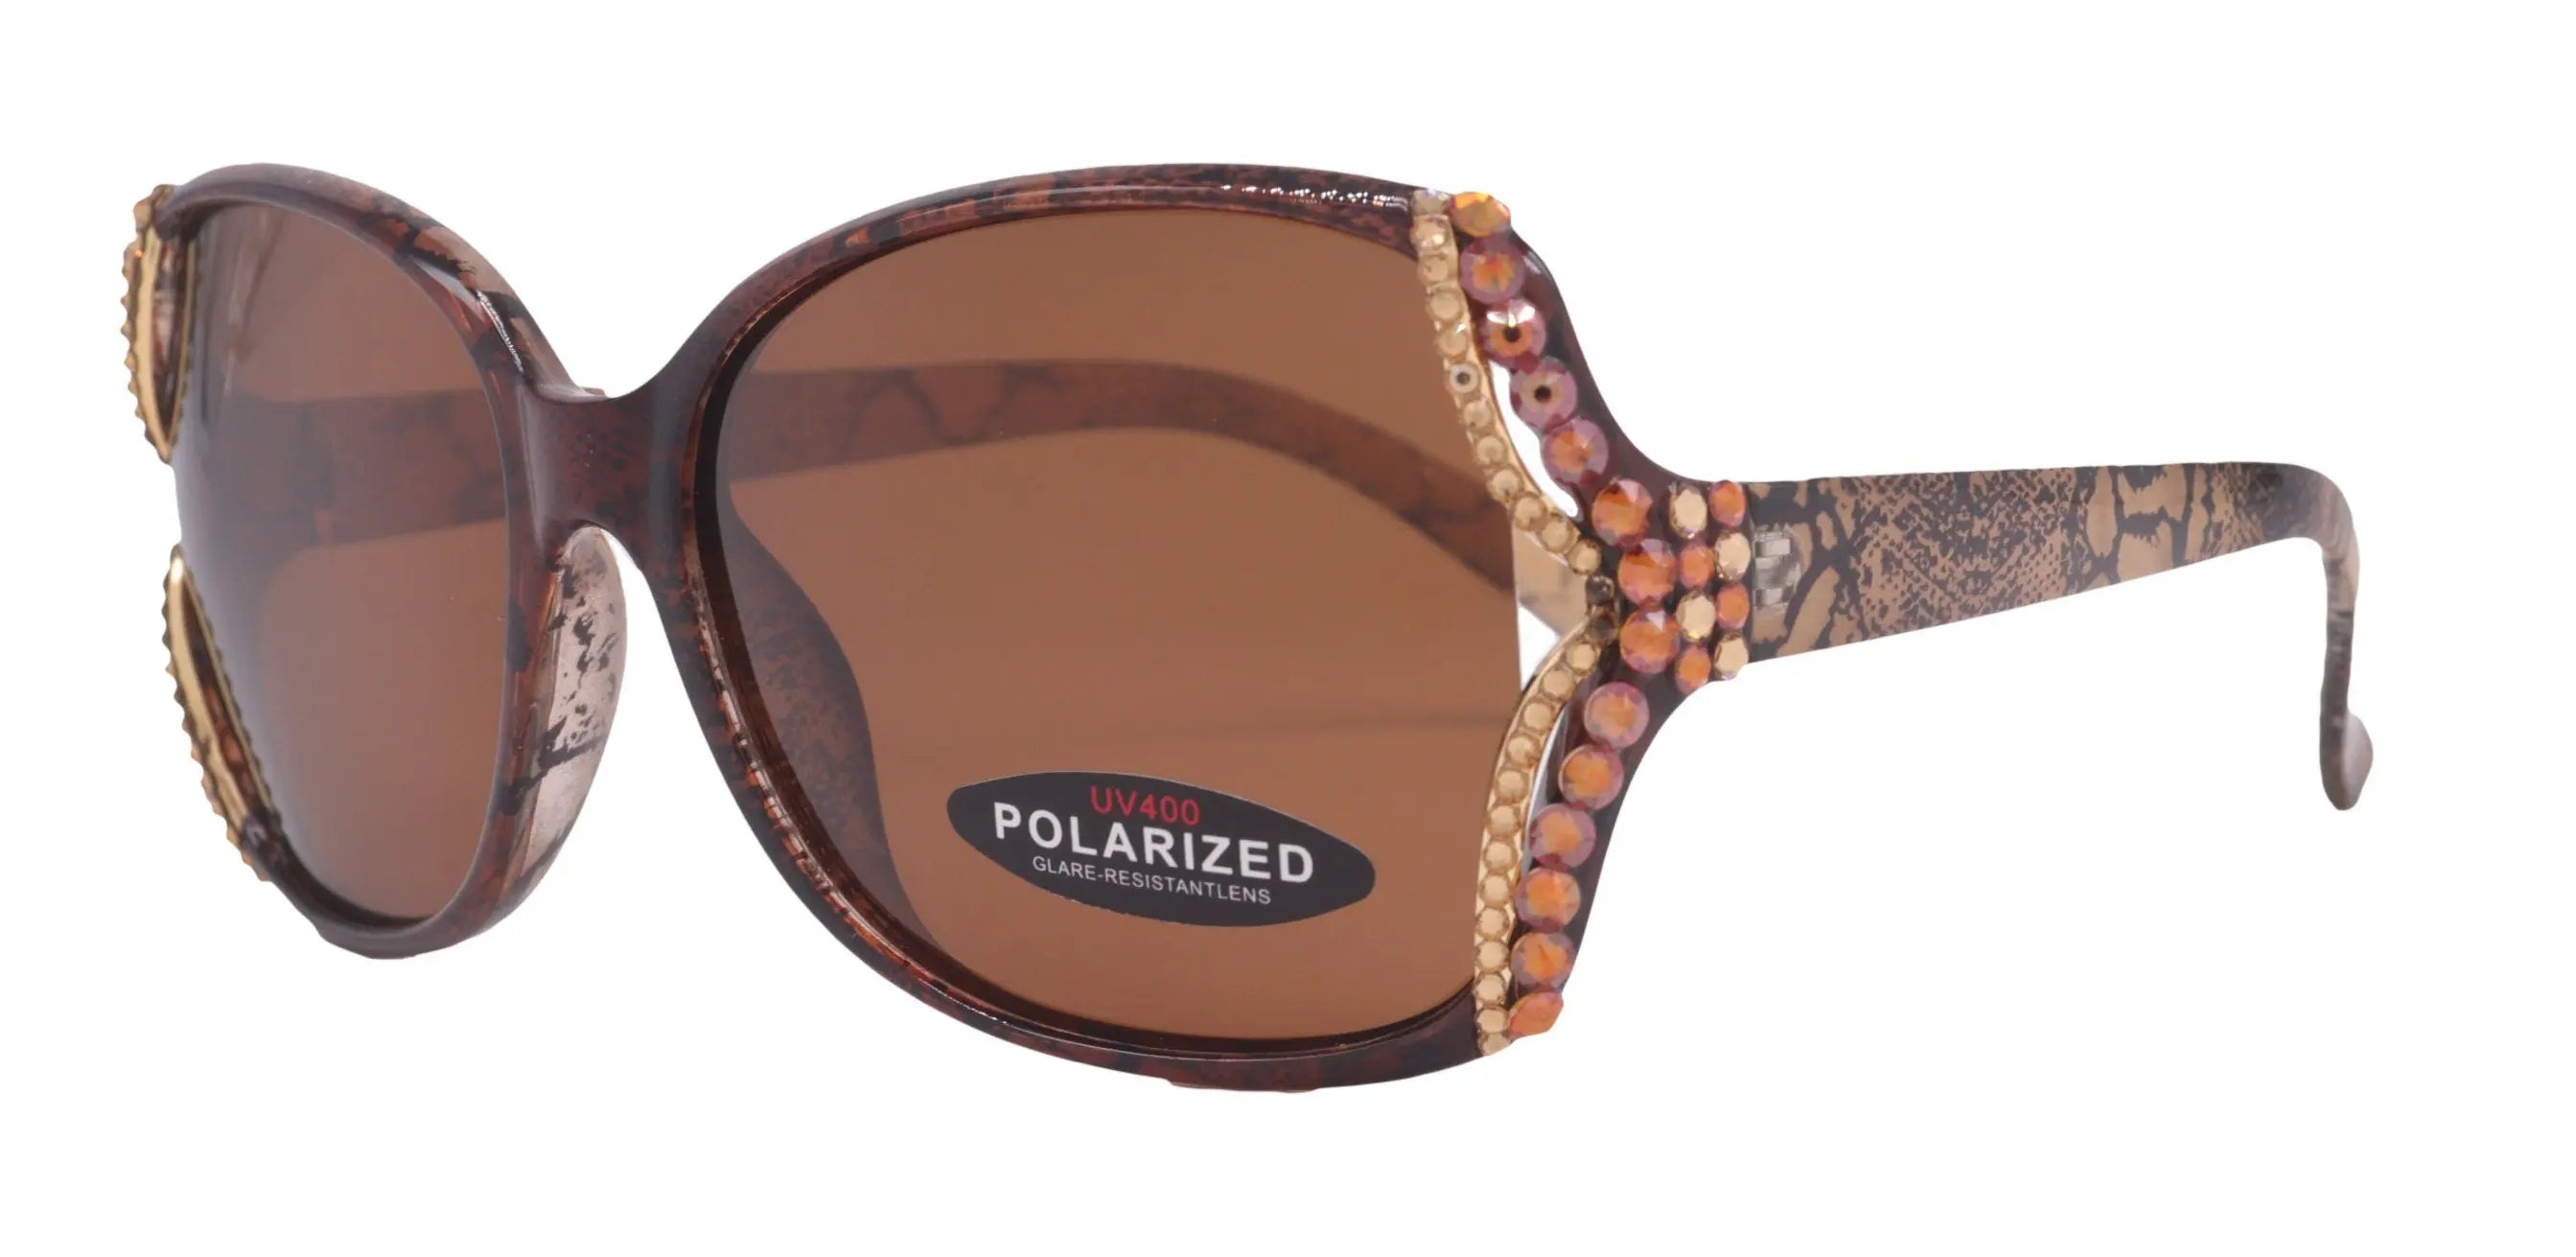 Fashion Sunglasses for Women Men, 100% UVA/UVB Protection Mirrored Lens,  FDA Standard Glasses | Colored sunglasses, Sunglasses, Sunglasses women